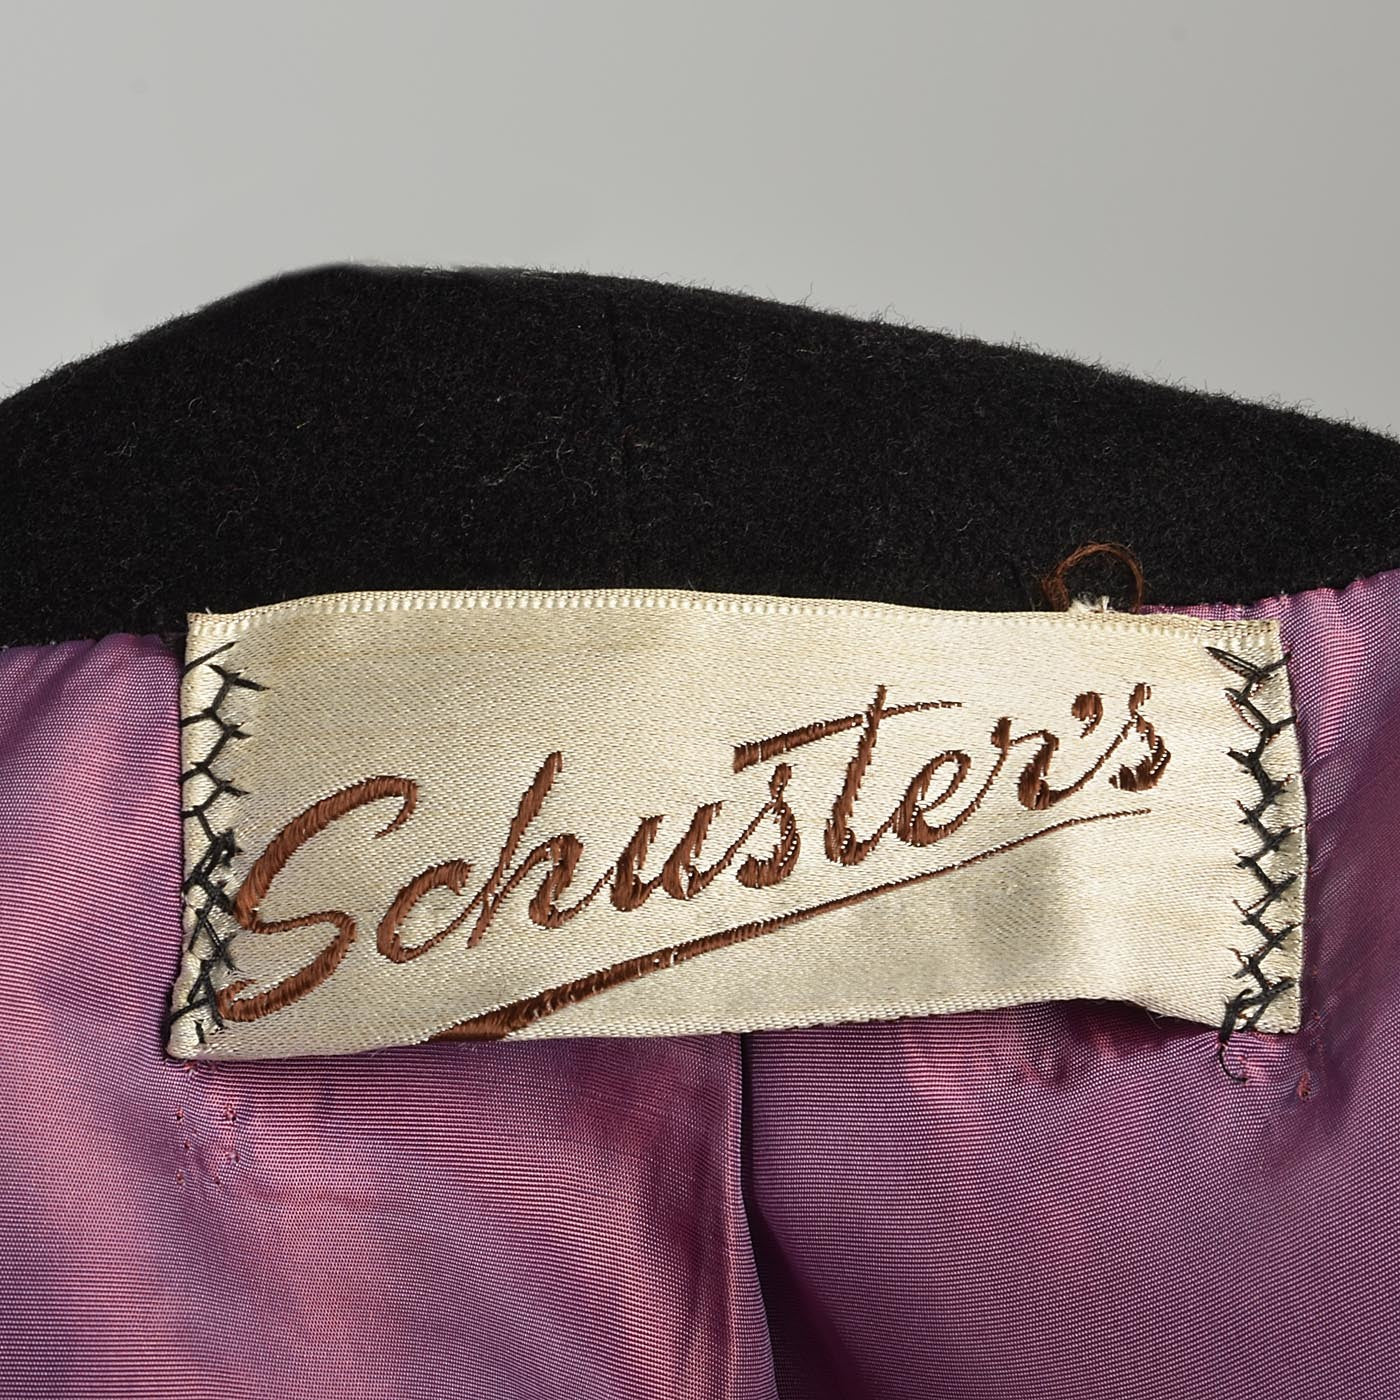 1950s Black Hourglass Princess Coat with Purple Lining